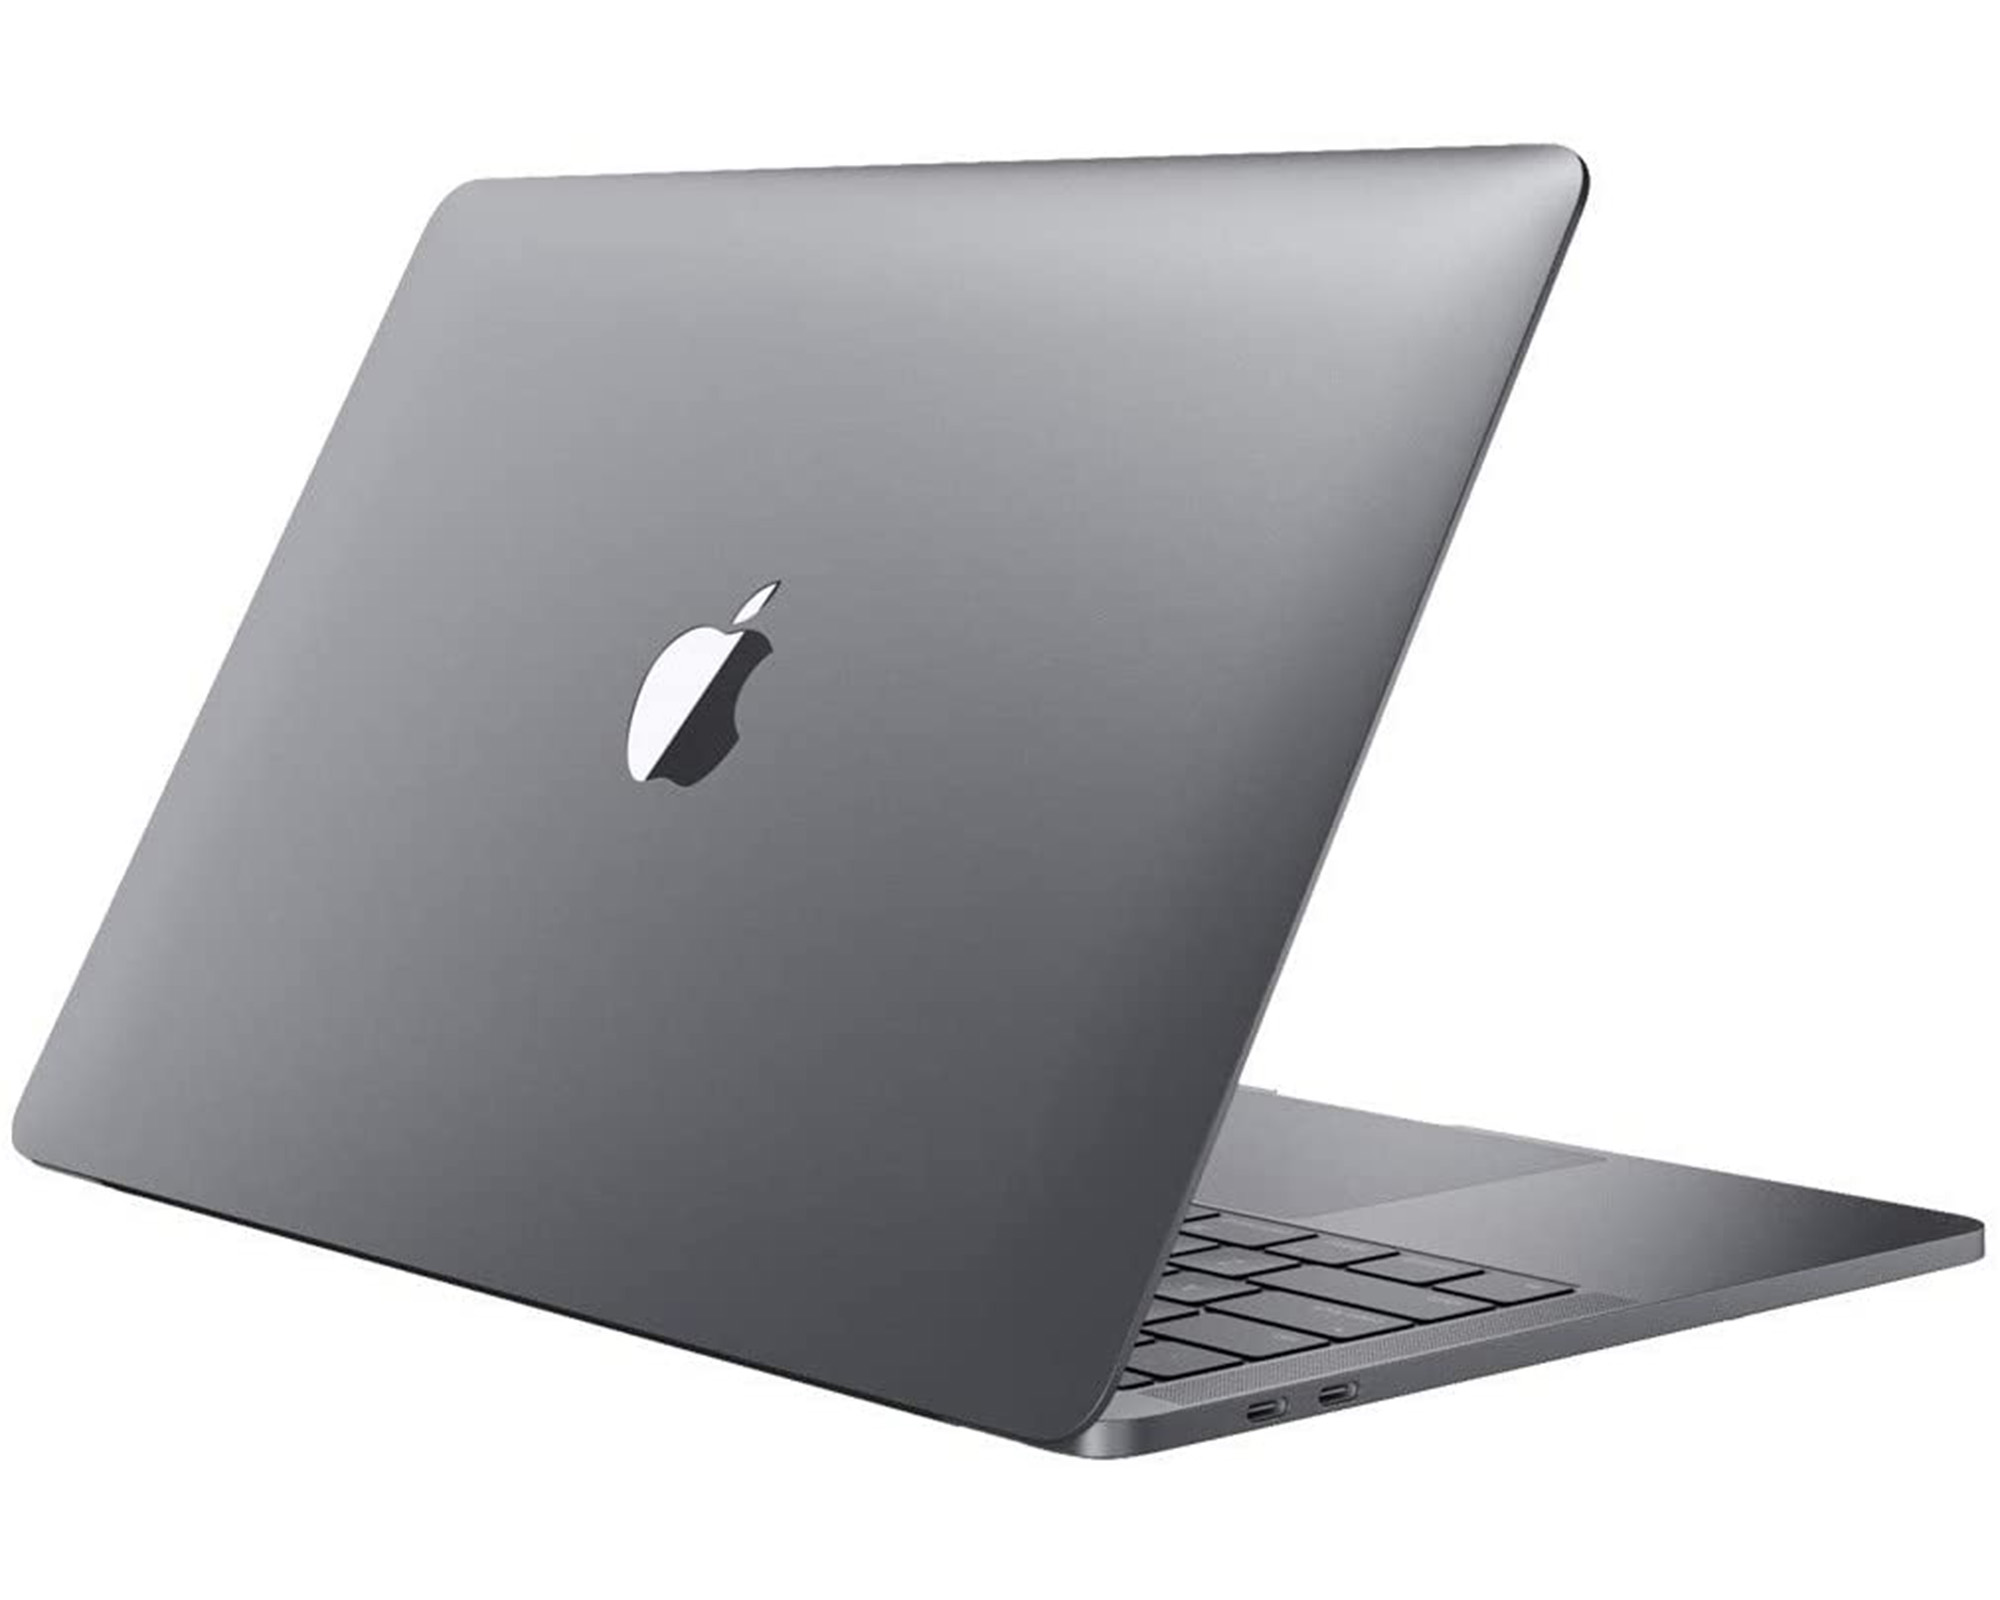 Apple MacBook Pro Laptop, 13.3\" Retina Display, Intel Core i5, 256GB SSD, Mac OS Sierra, MPXT2B/A. Pre-Owned: Like New - image 5 of 5